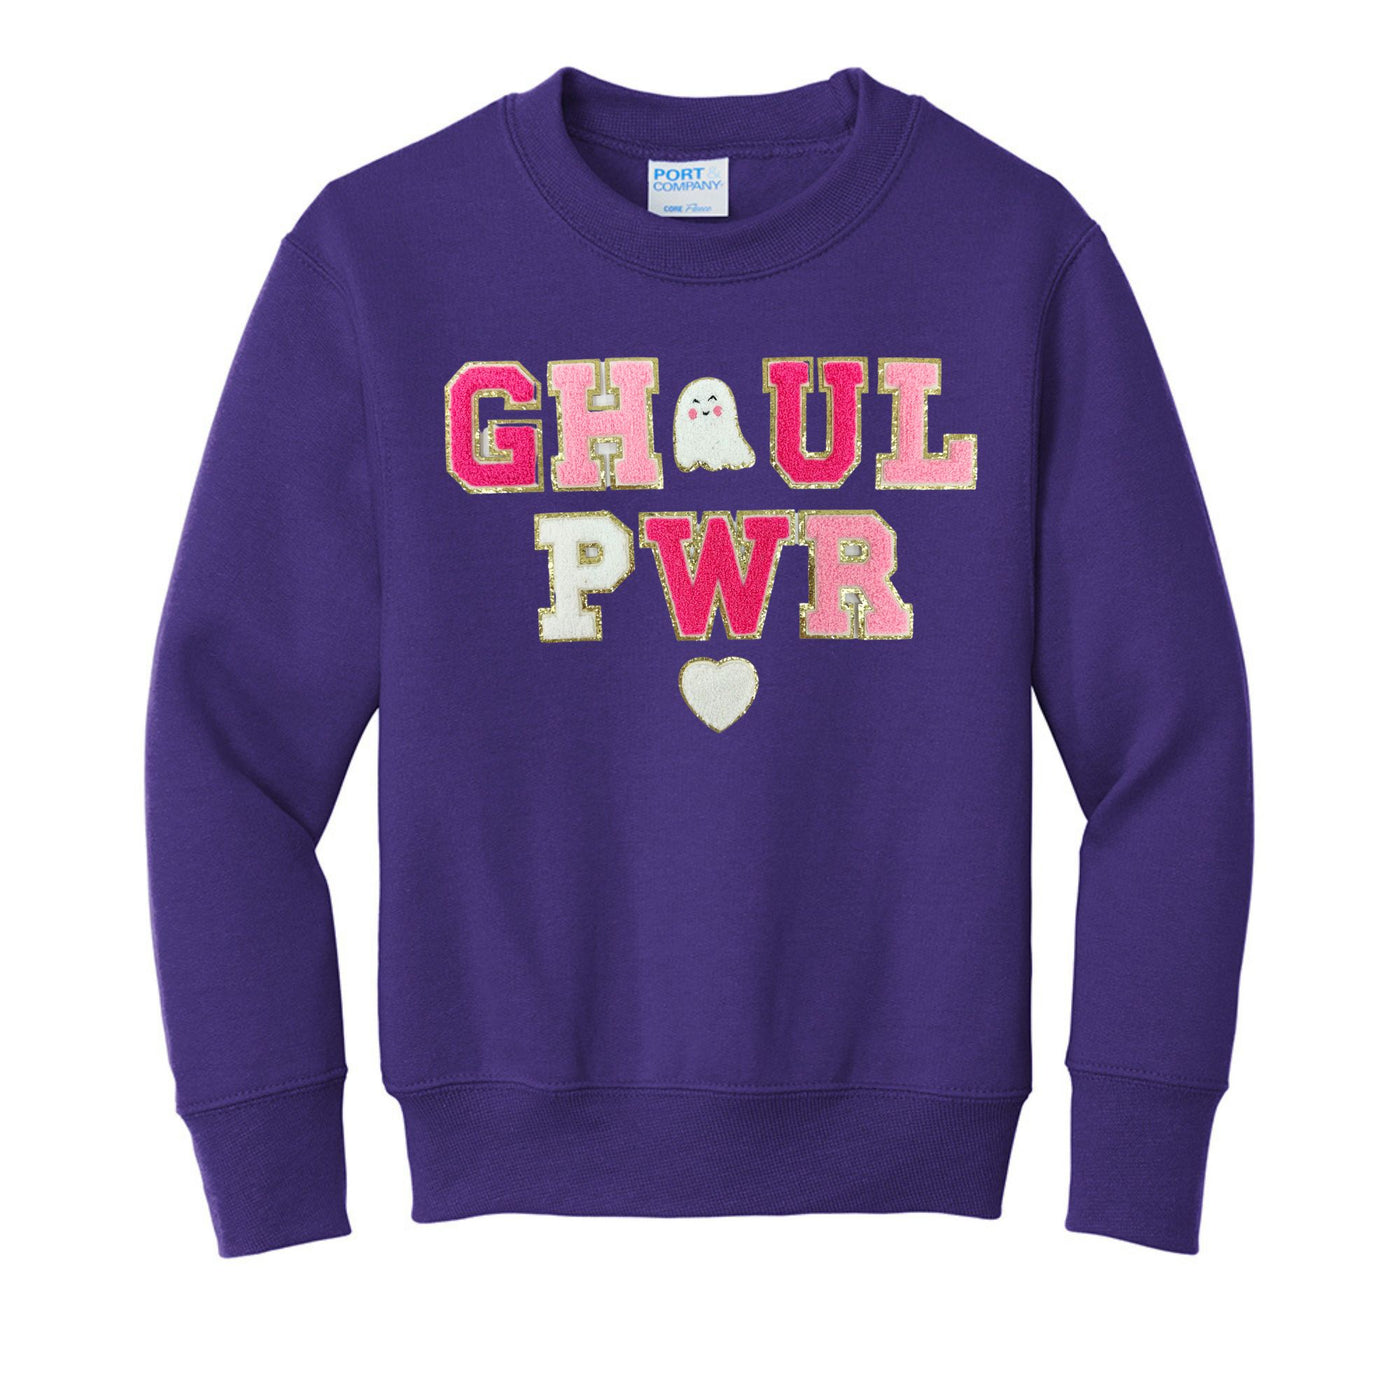 Kids 'Ghoul Pwr' Letter Patch Crewneck Sweatshirt